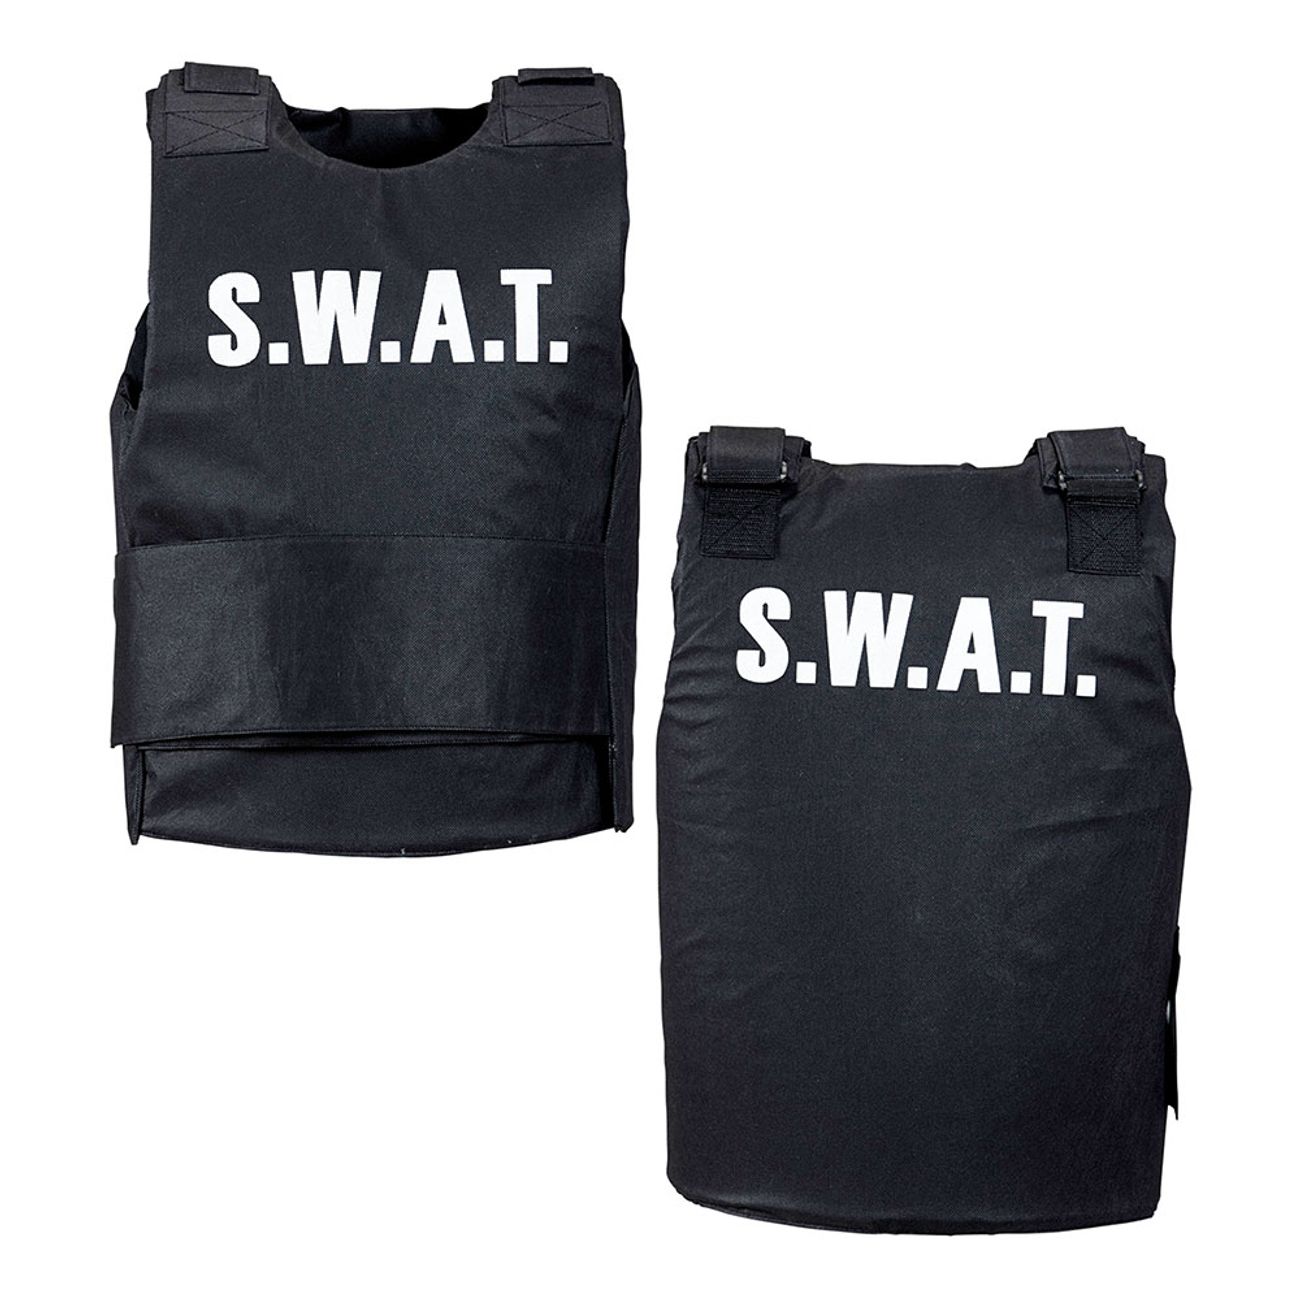 swat-vast2-3